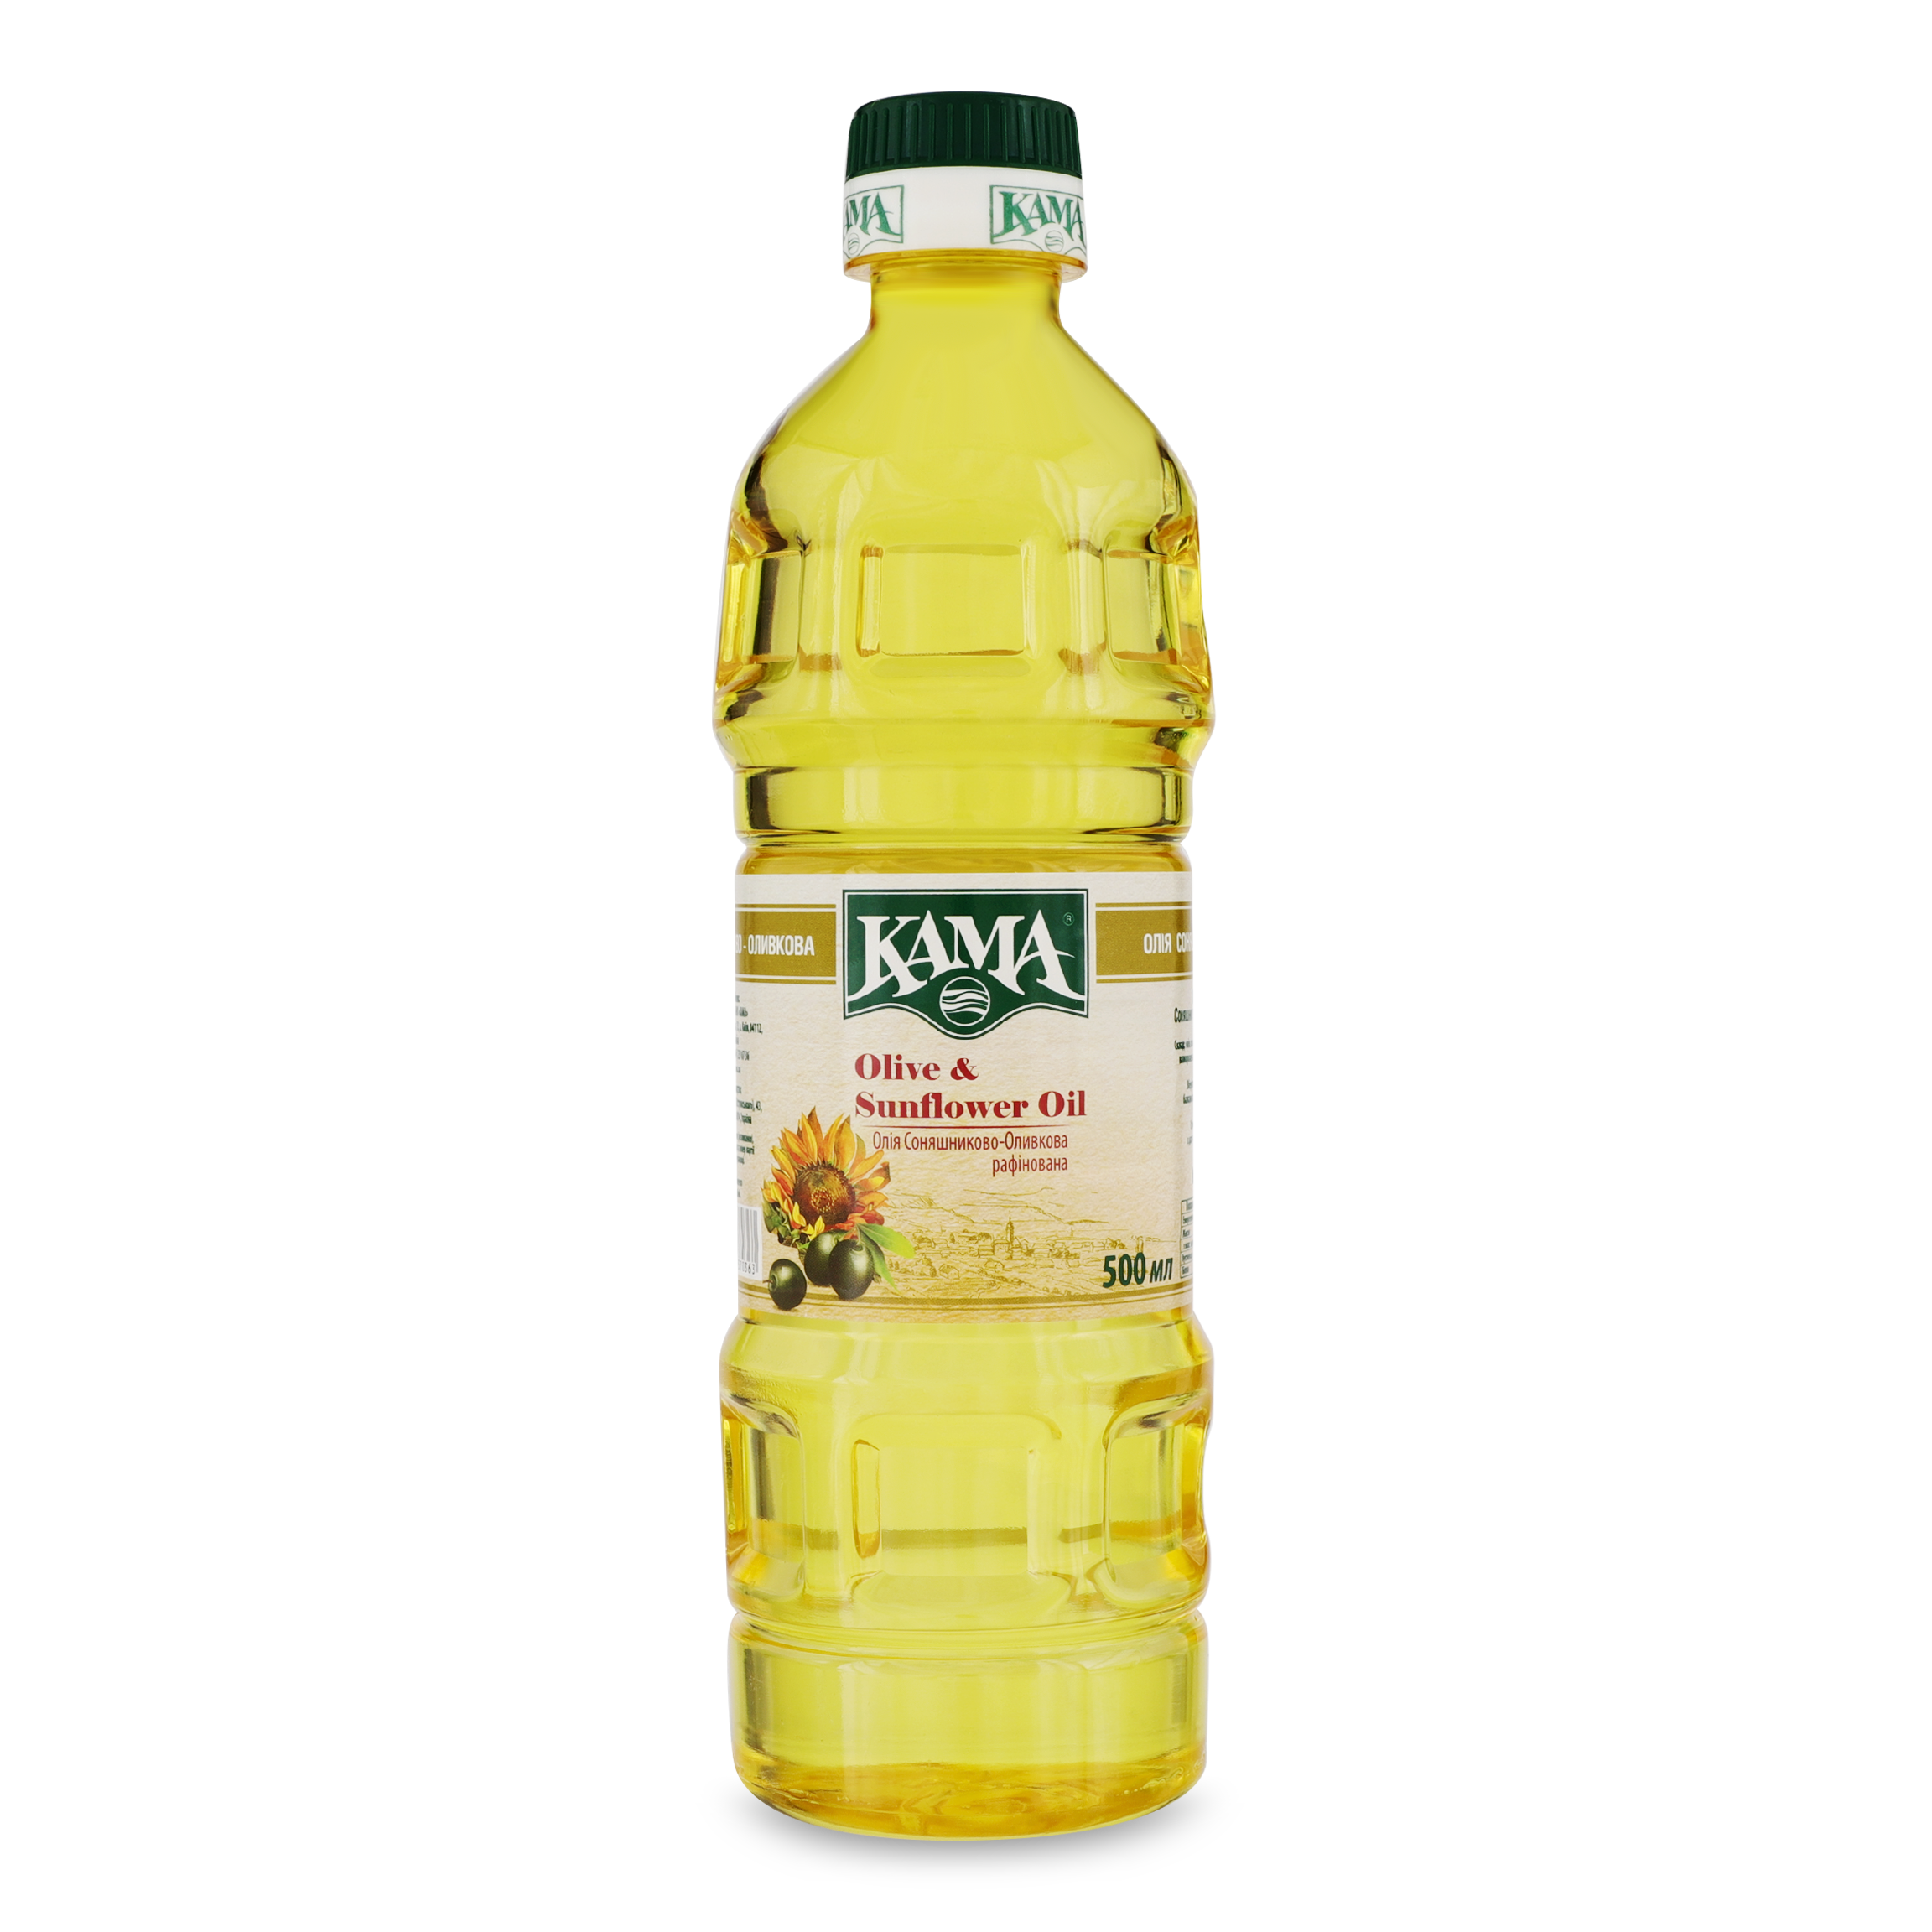 KAMA Refined Sunflower-Olive Oil 500ml